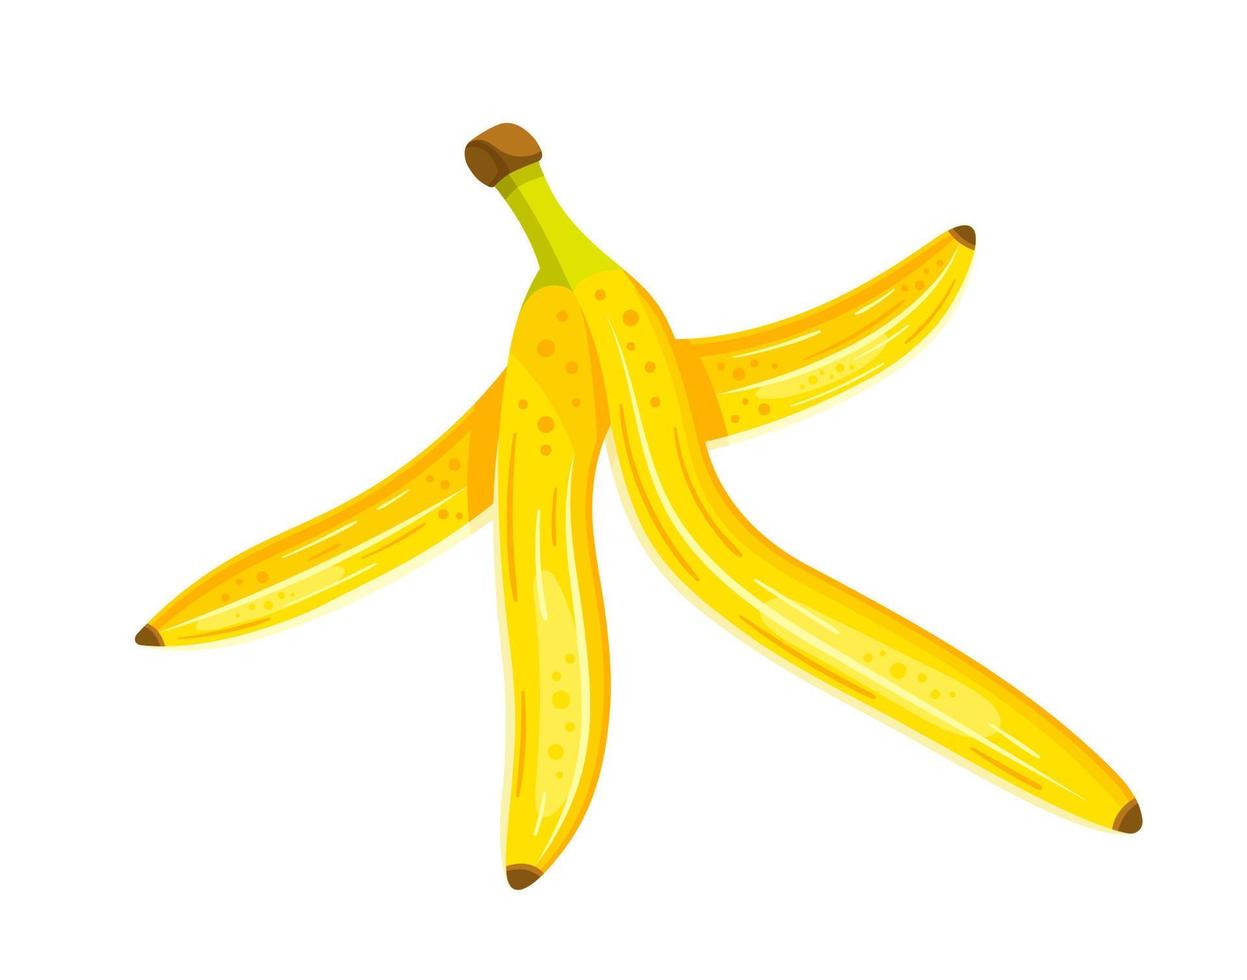 Yellow banana peel in cartoon style vector